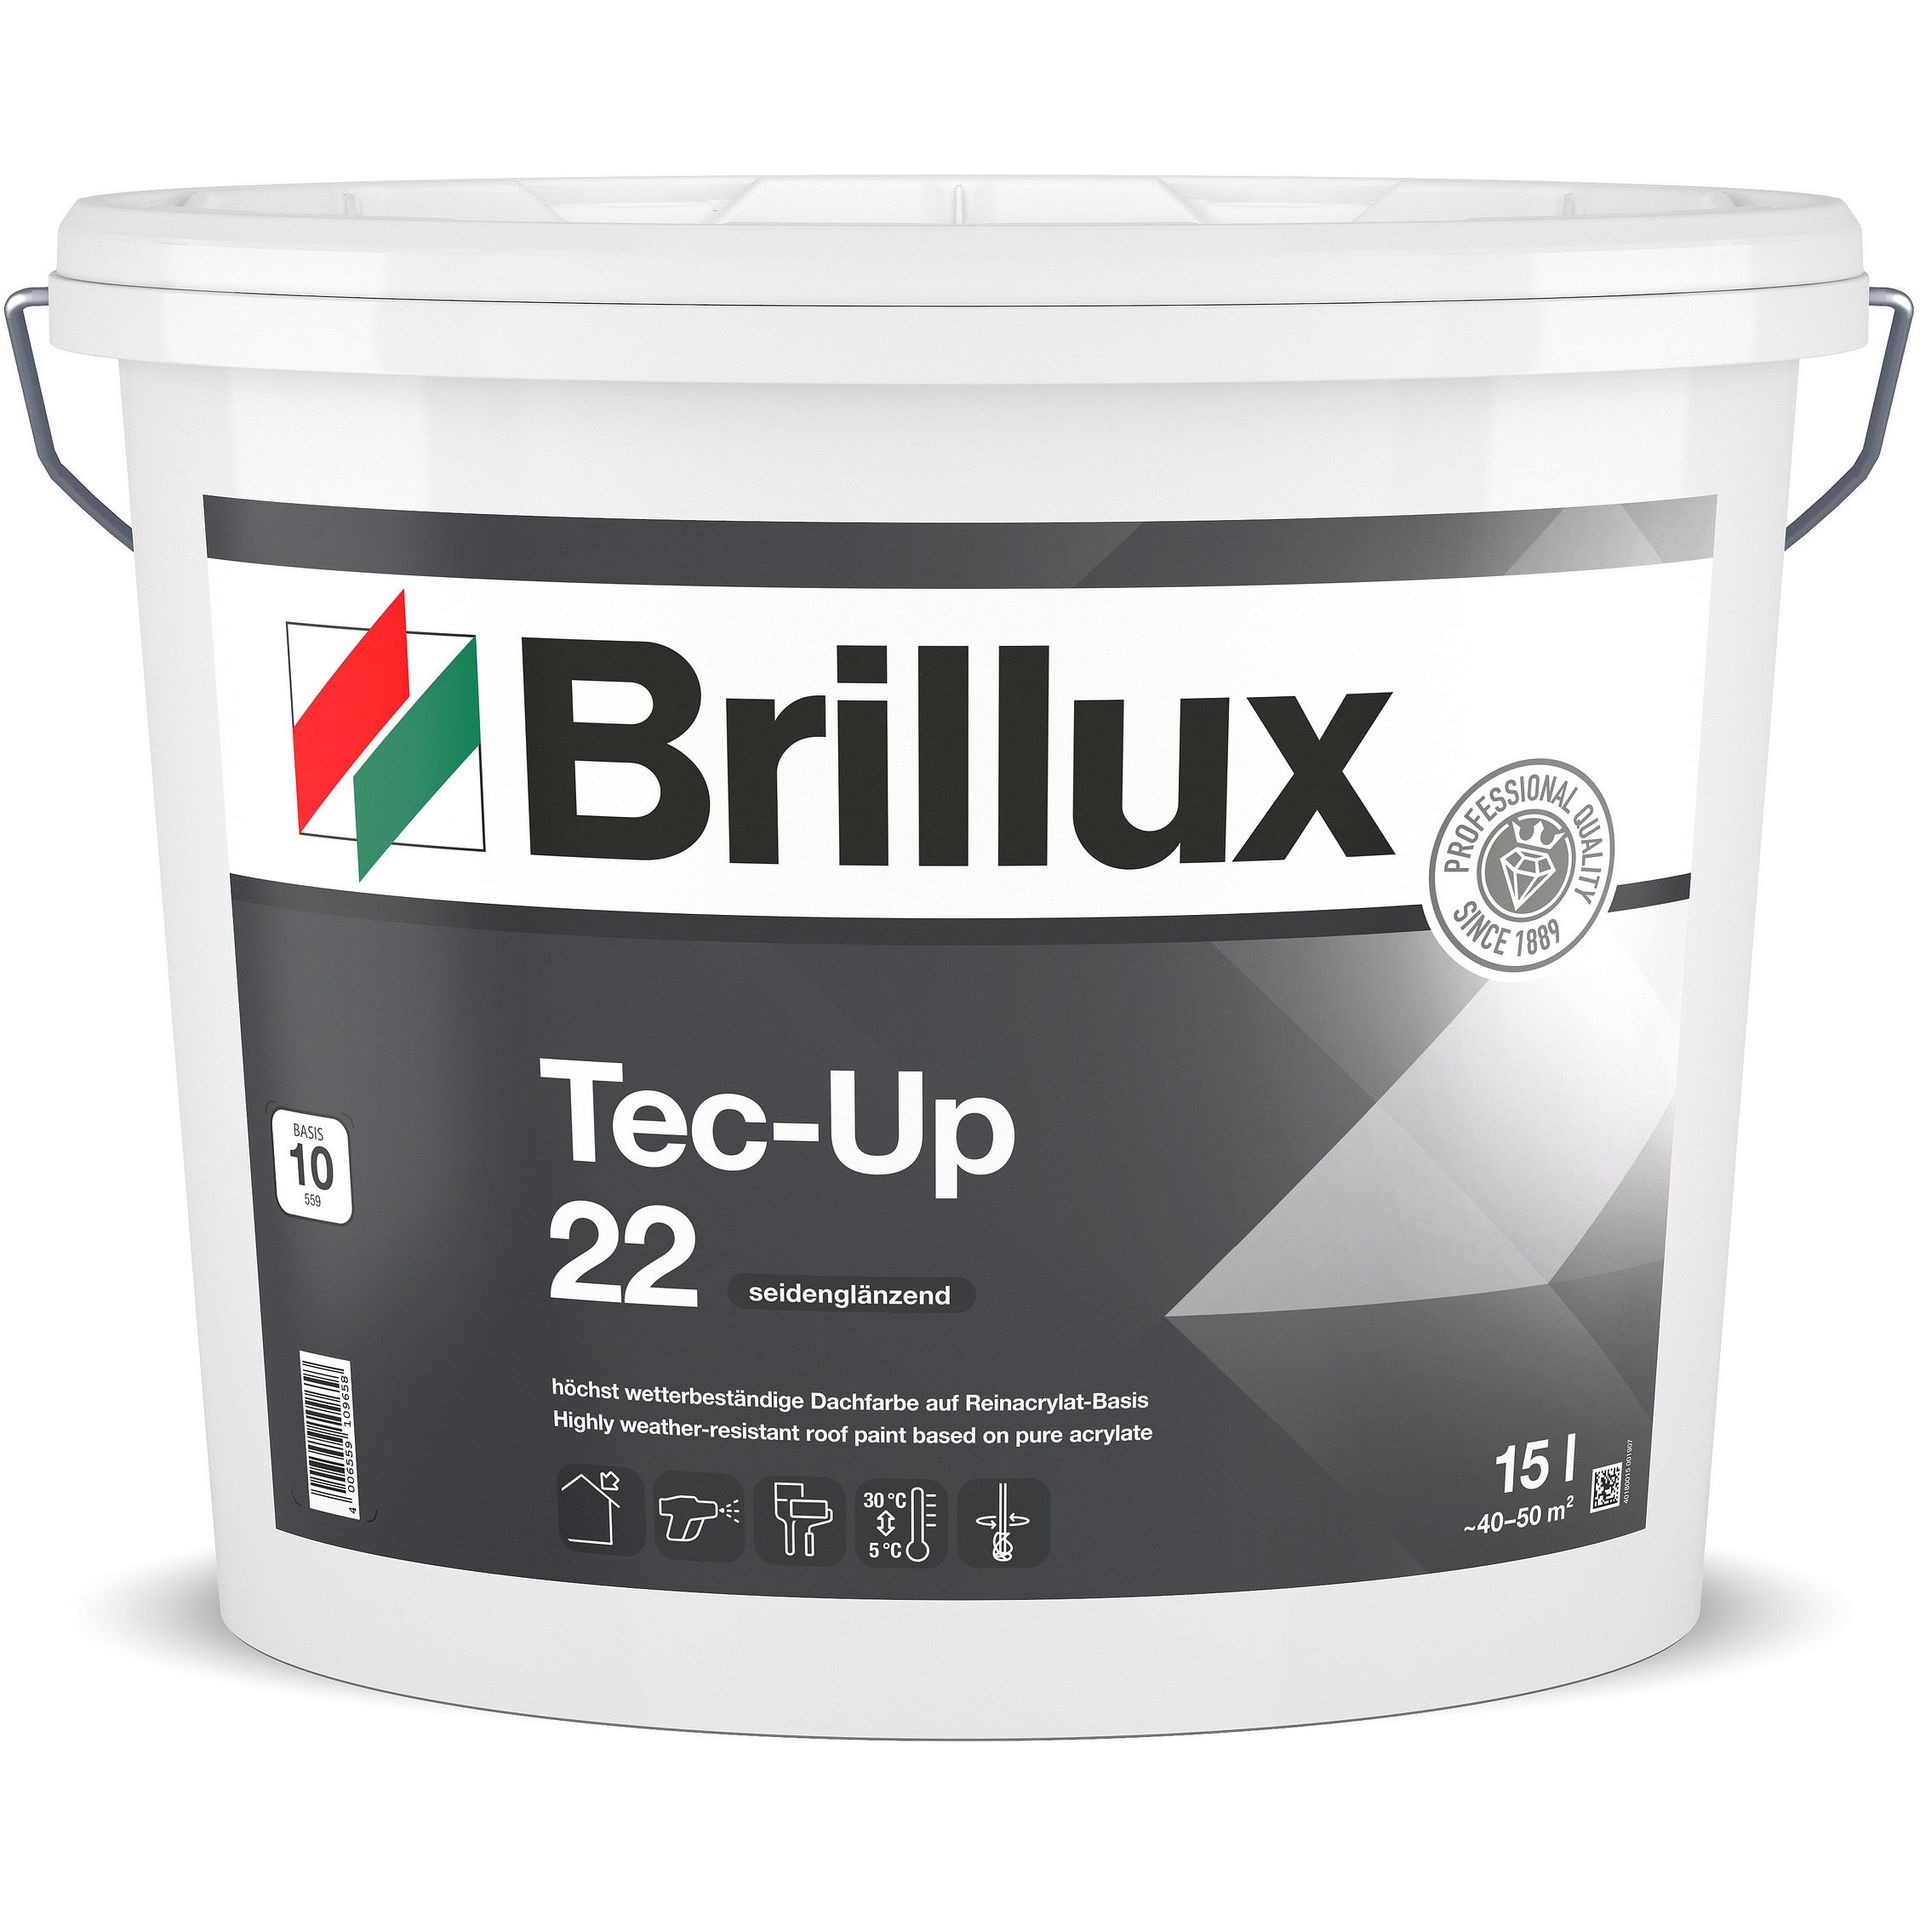 Brillux Tec-Up 22 Dachfarbe 2,5 l schwarz